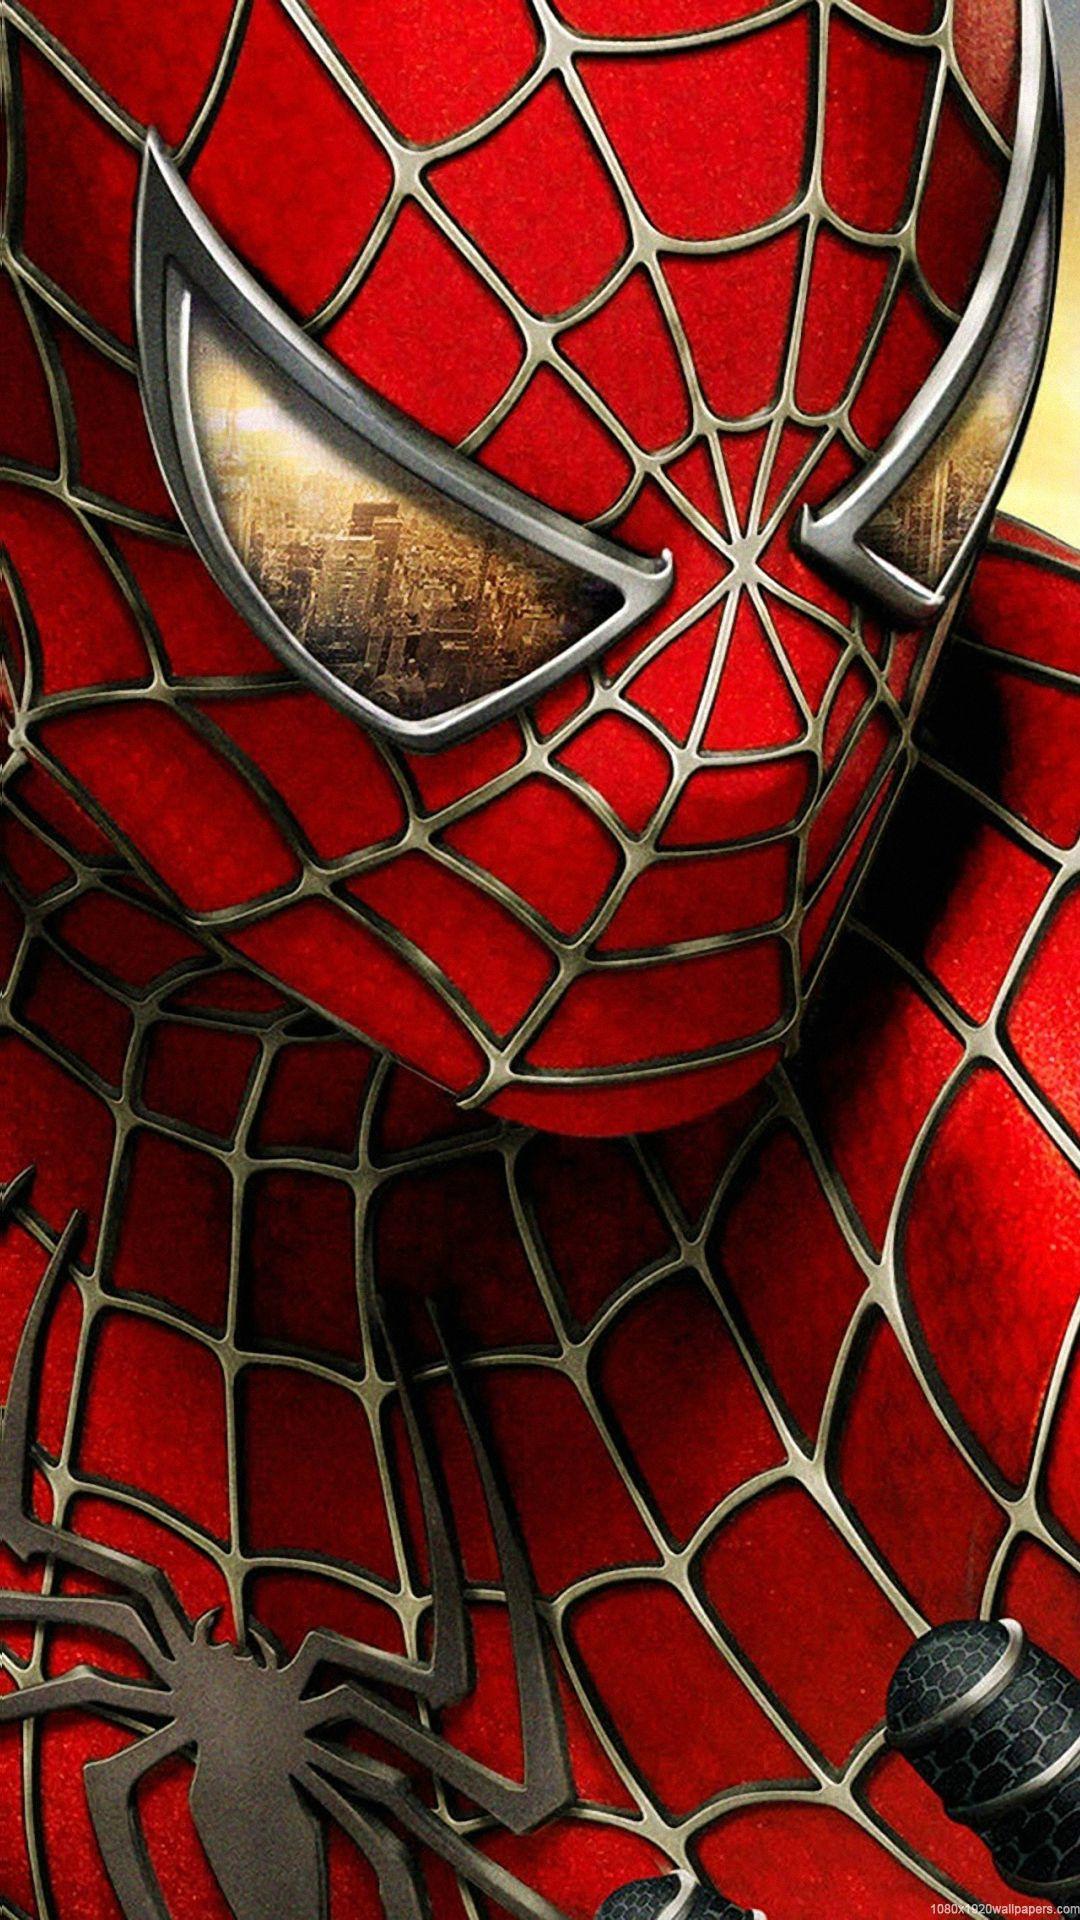 Spider man mobile wallpaper Gallery